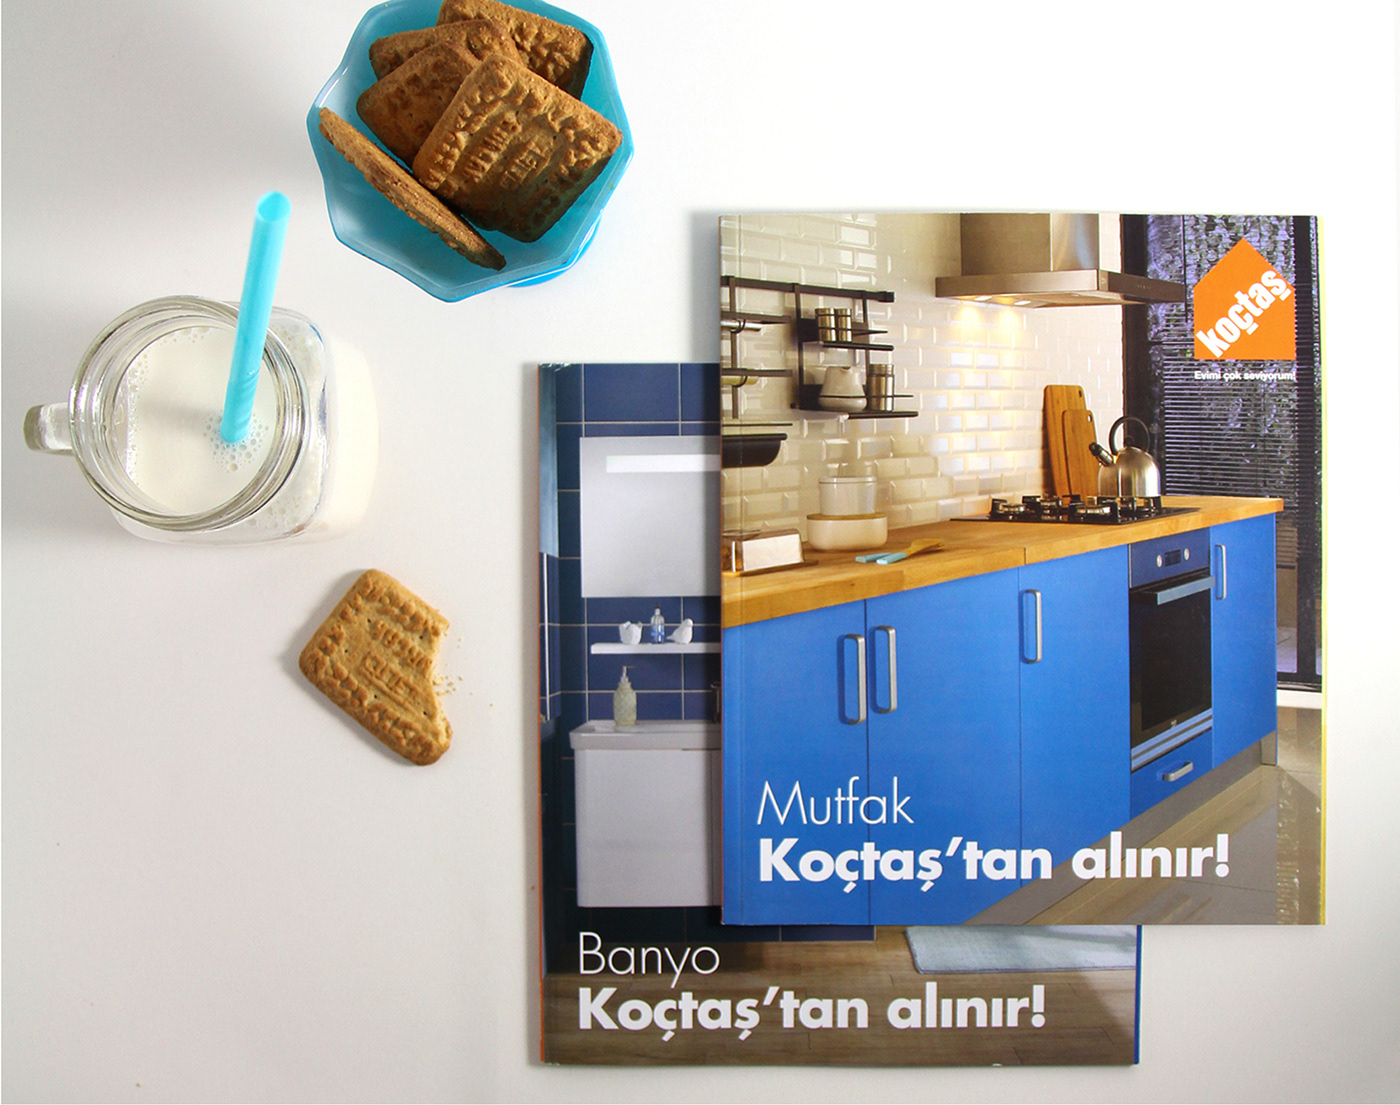 Banyo bathroom catalog katalog kitchen Koçtaş mutfak